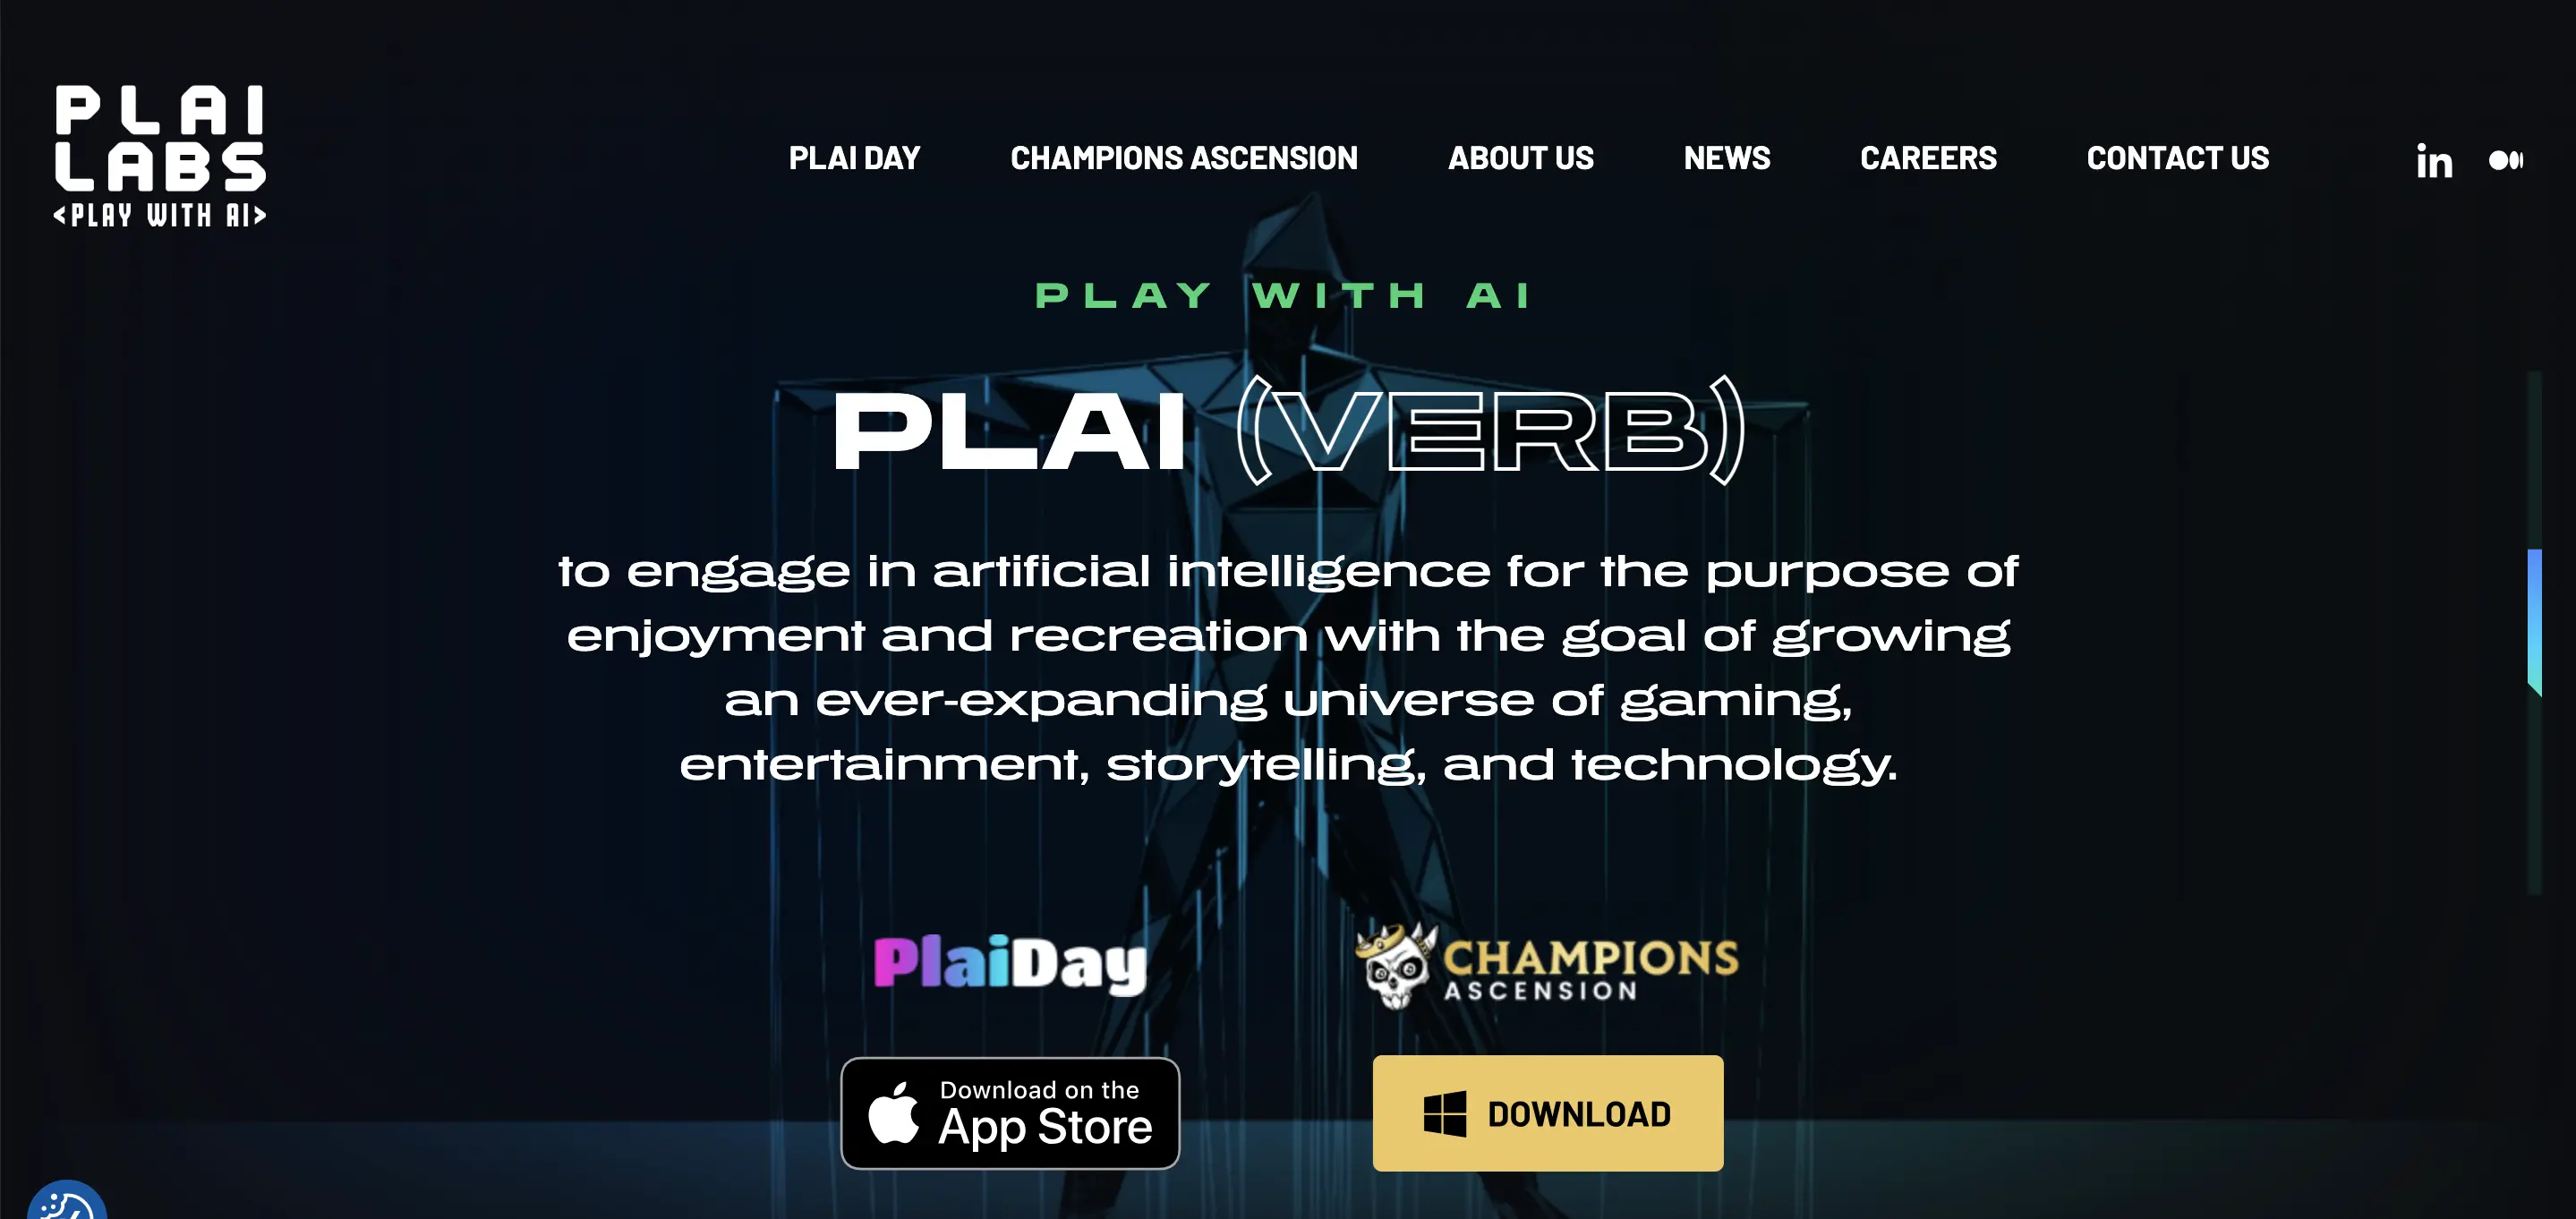 Plailabs-homepage